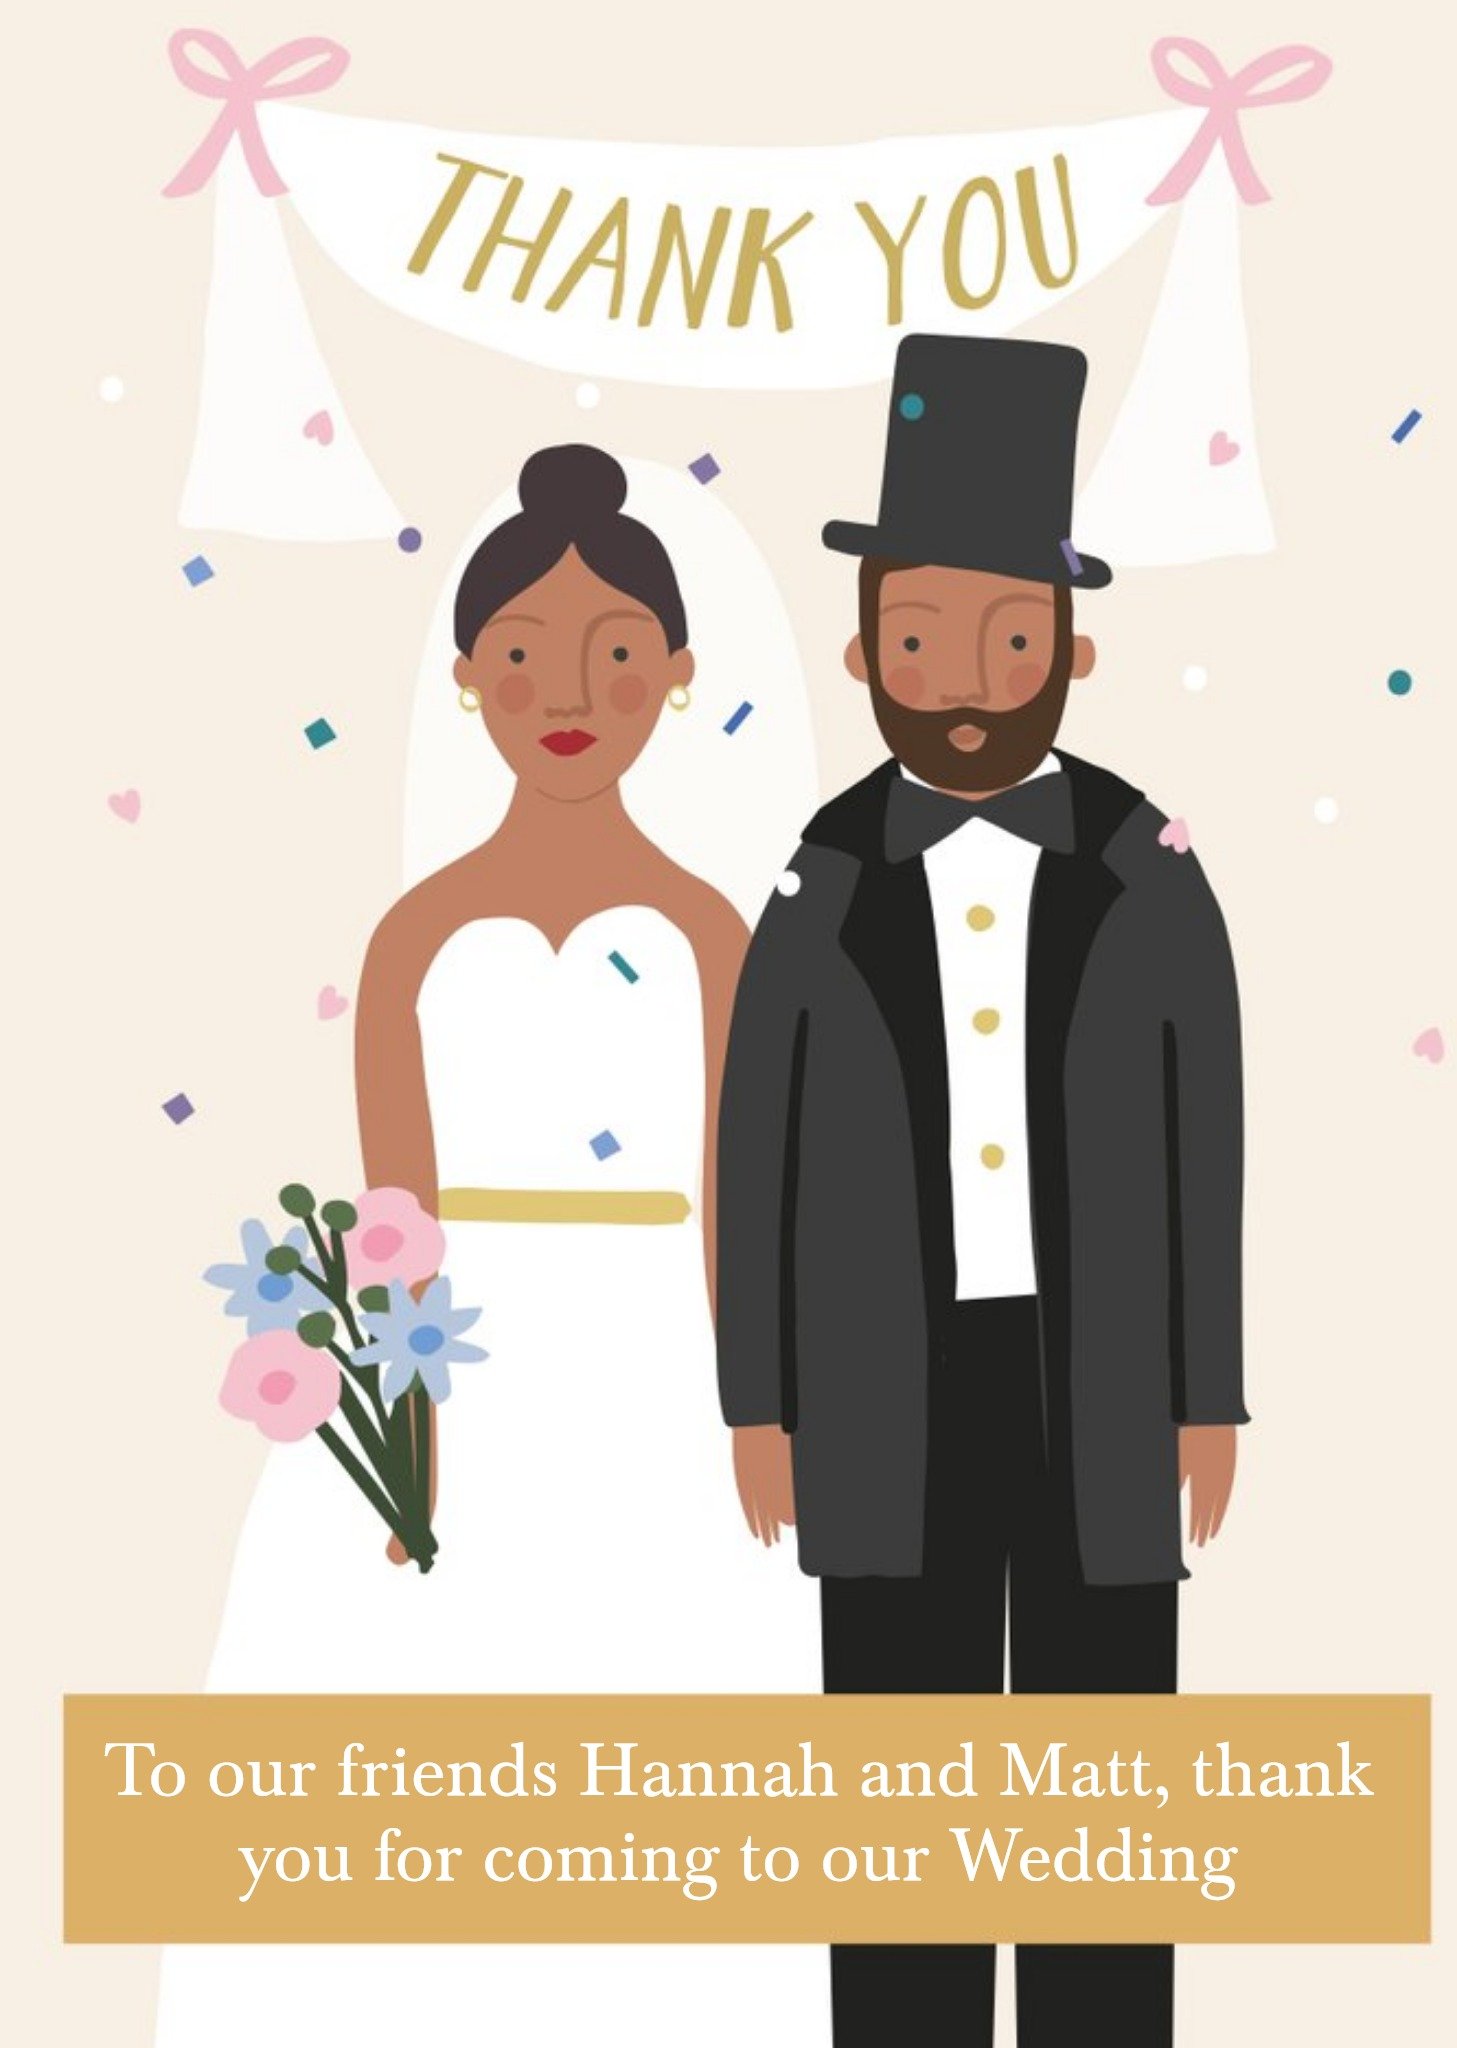 Moonpig Illustration Of Newlyweds Wedding Day Thank You Card Ecard